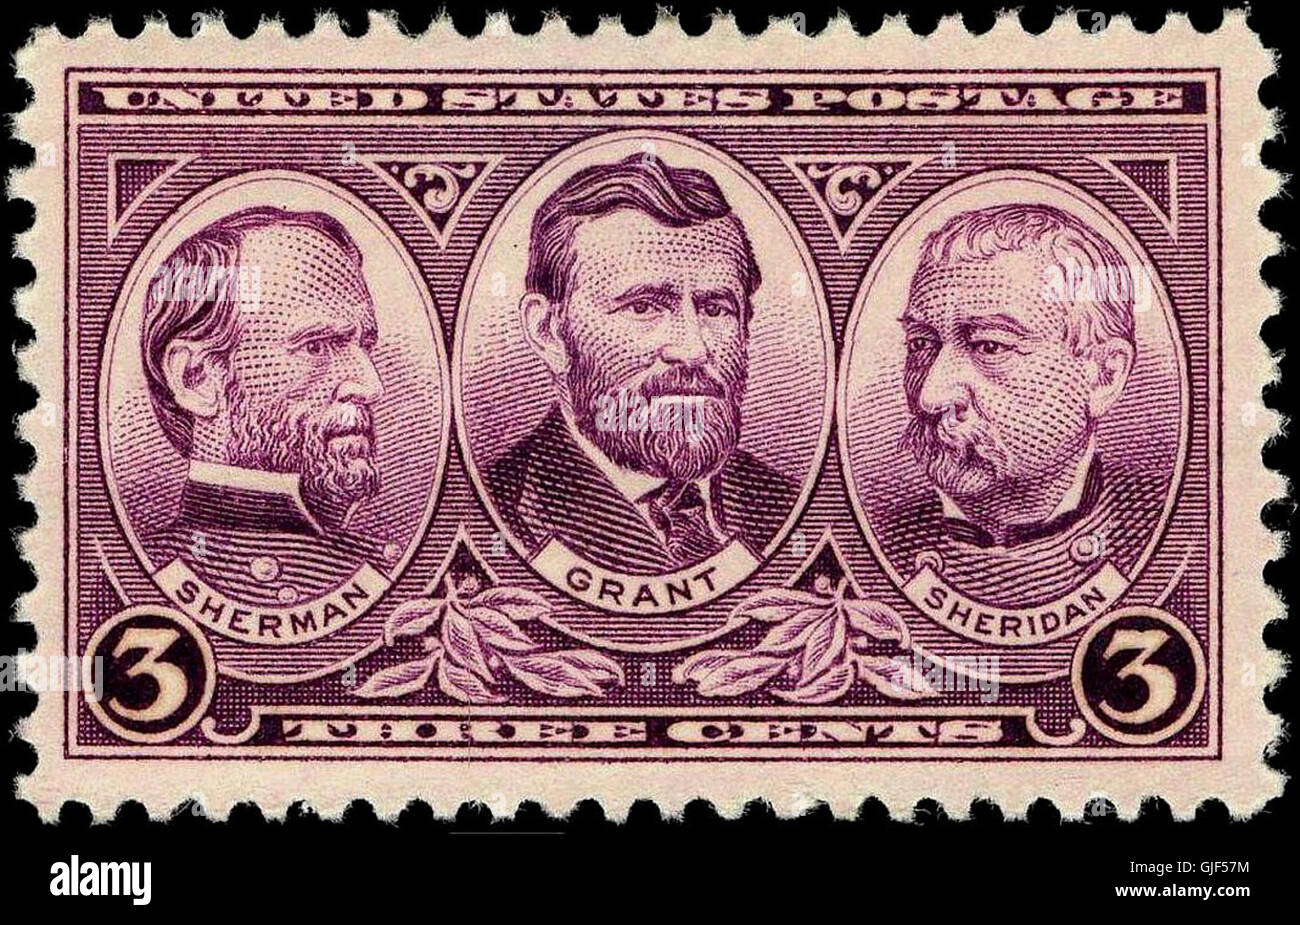 1870 Photo: Ulysses S William Tecumseh Sherman approximately Grant Size: 8x10 Sheridan